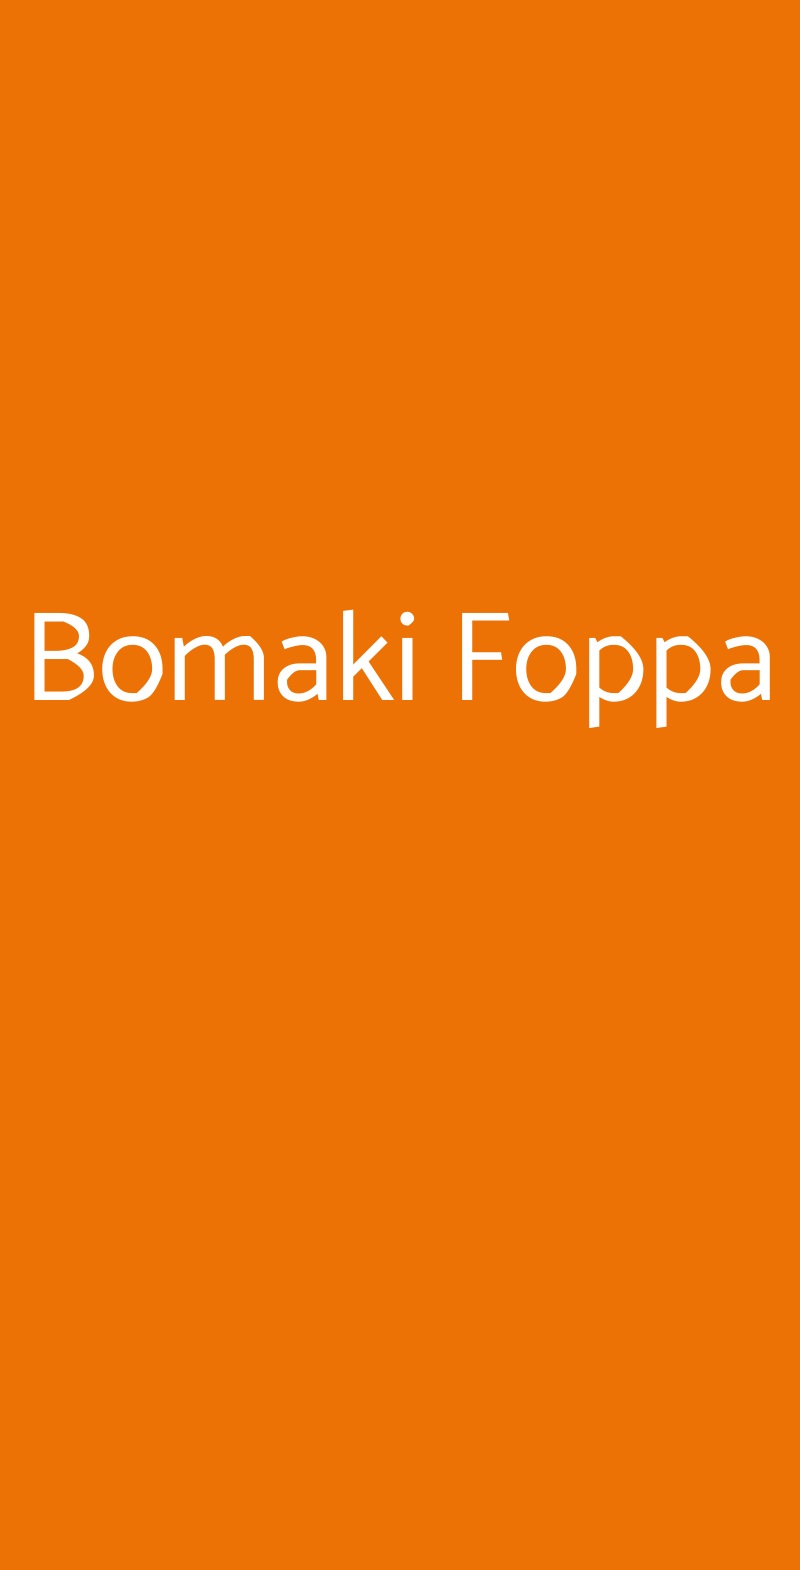 Bomaki Foppa Milano menù 1 pagina